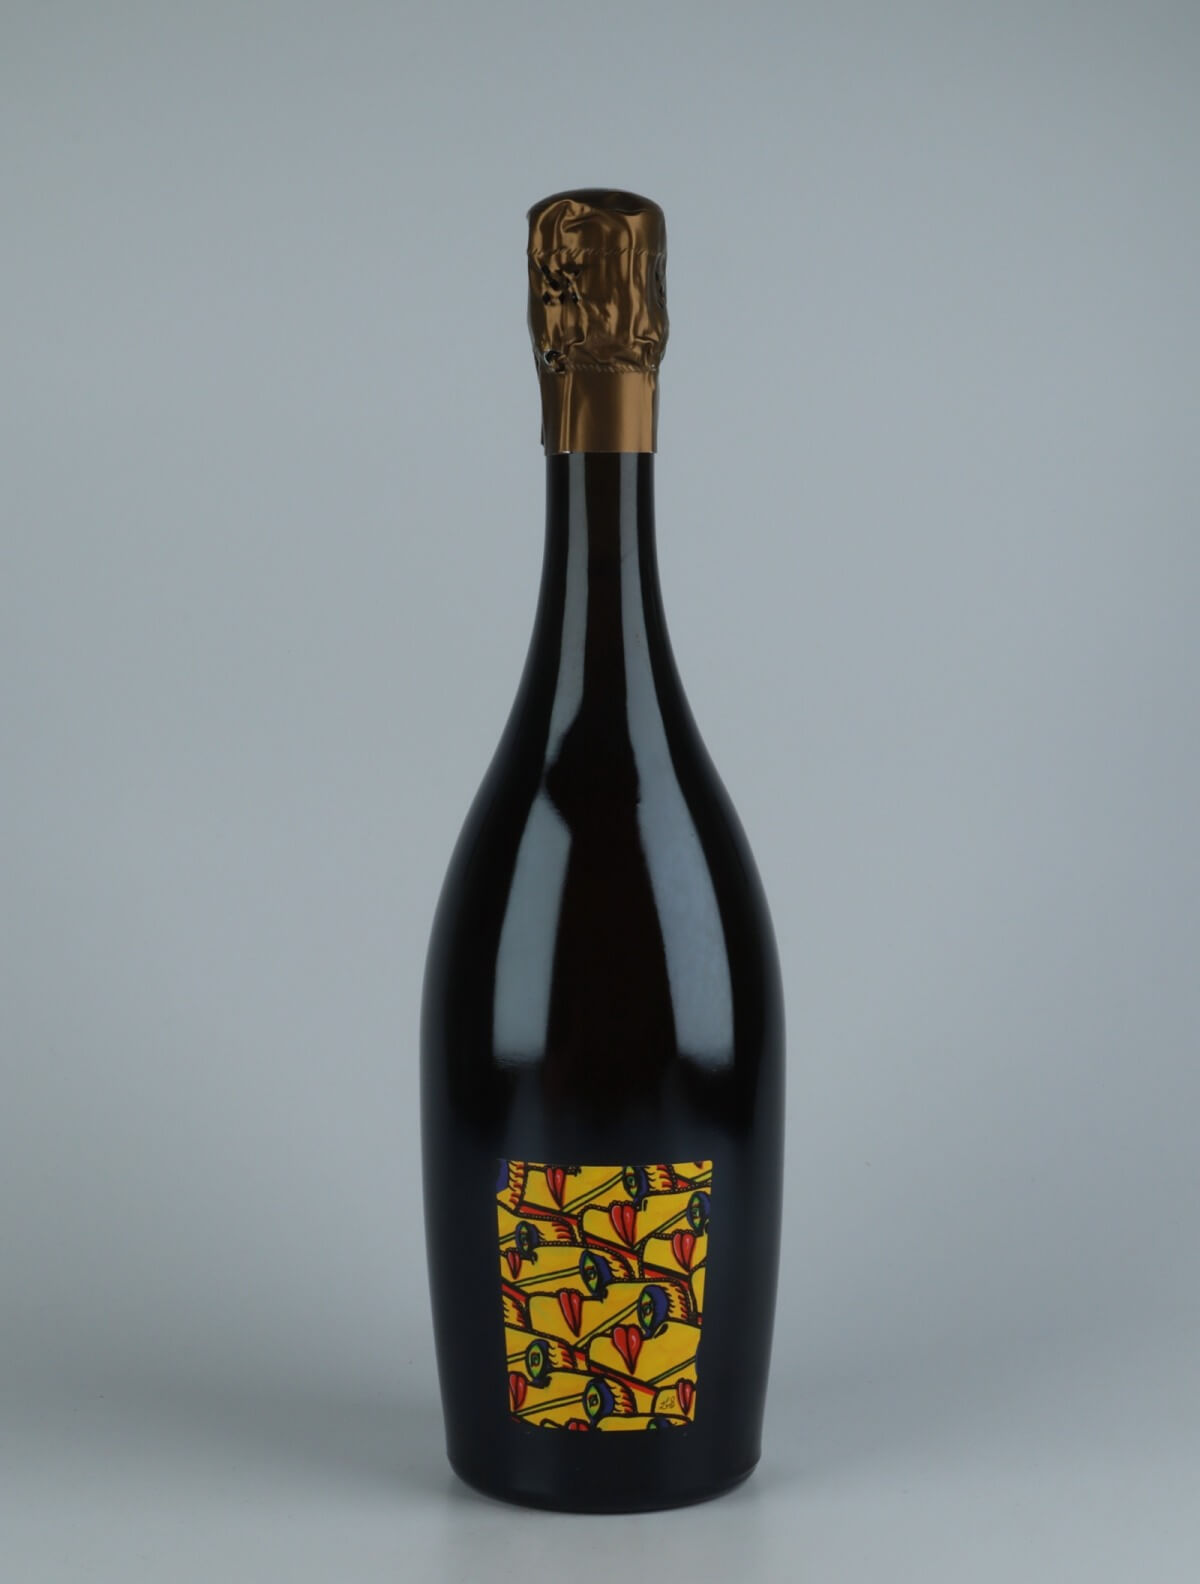 A bottle 2015 Logos Blanc - Les Hazardes - Brut Nature Sparkling from Stroebel, Champagne in France